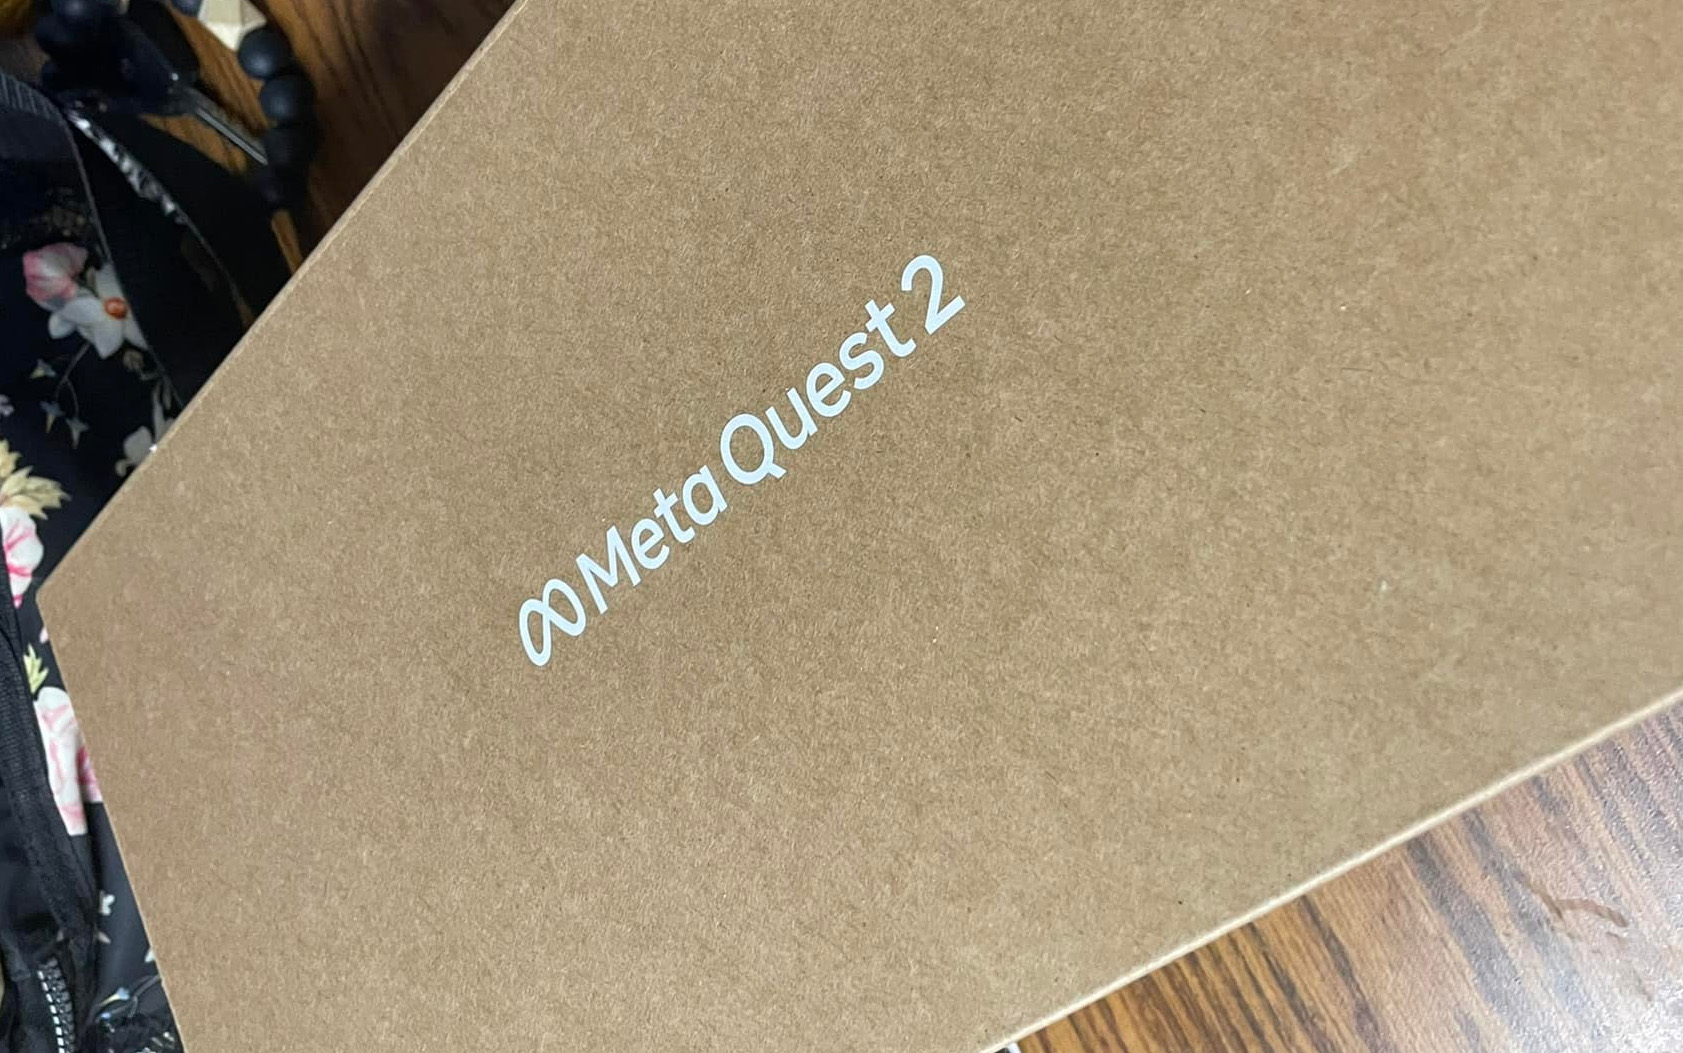 Meta Quest 2 box